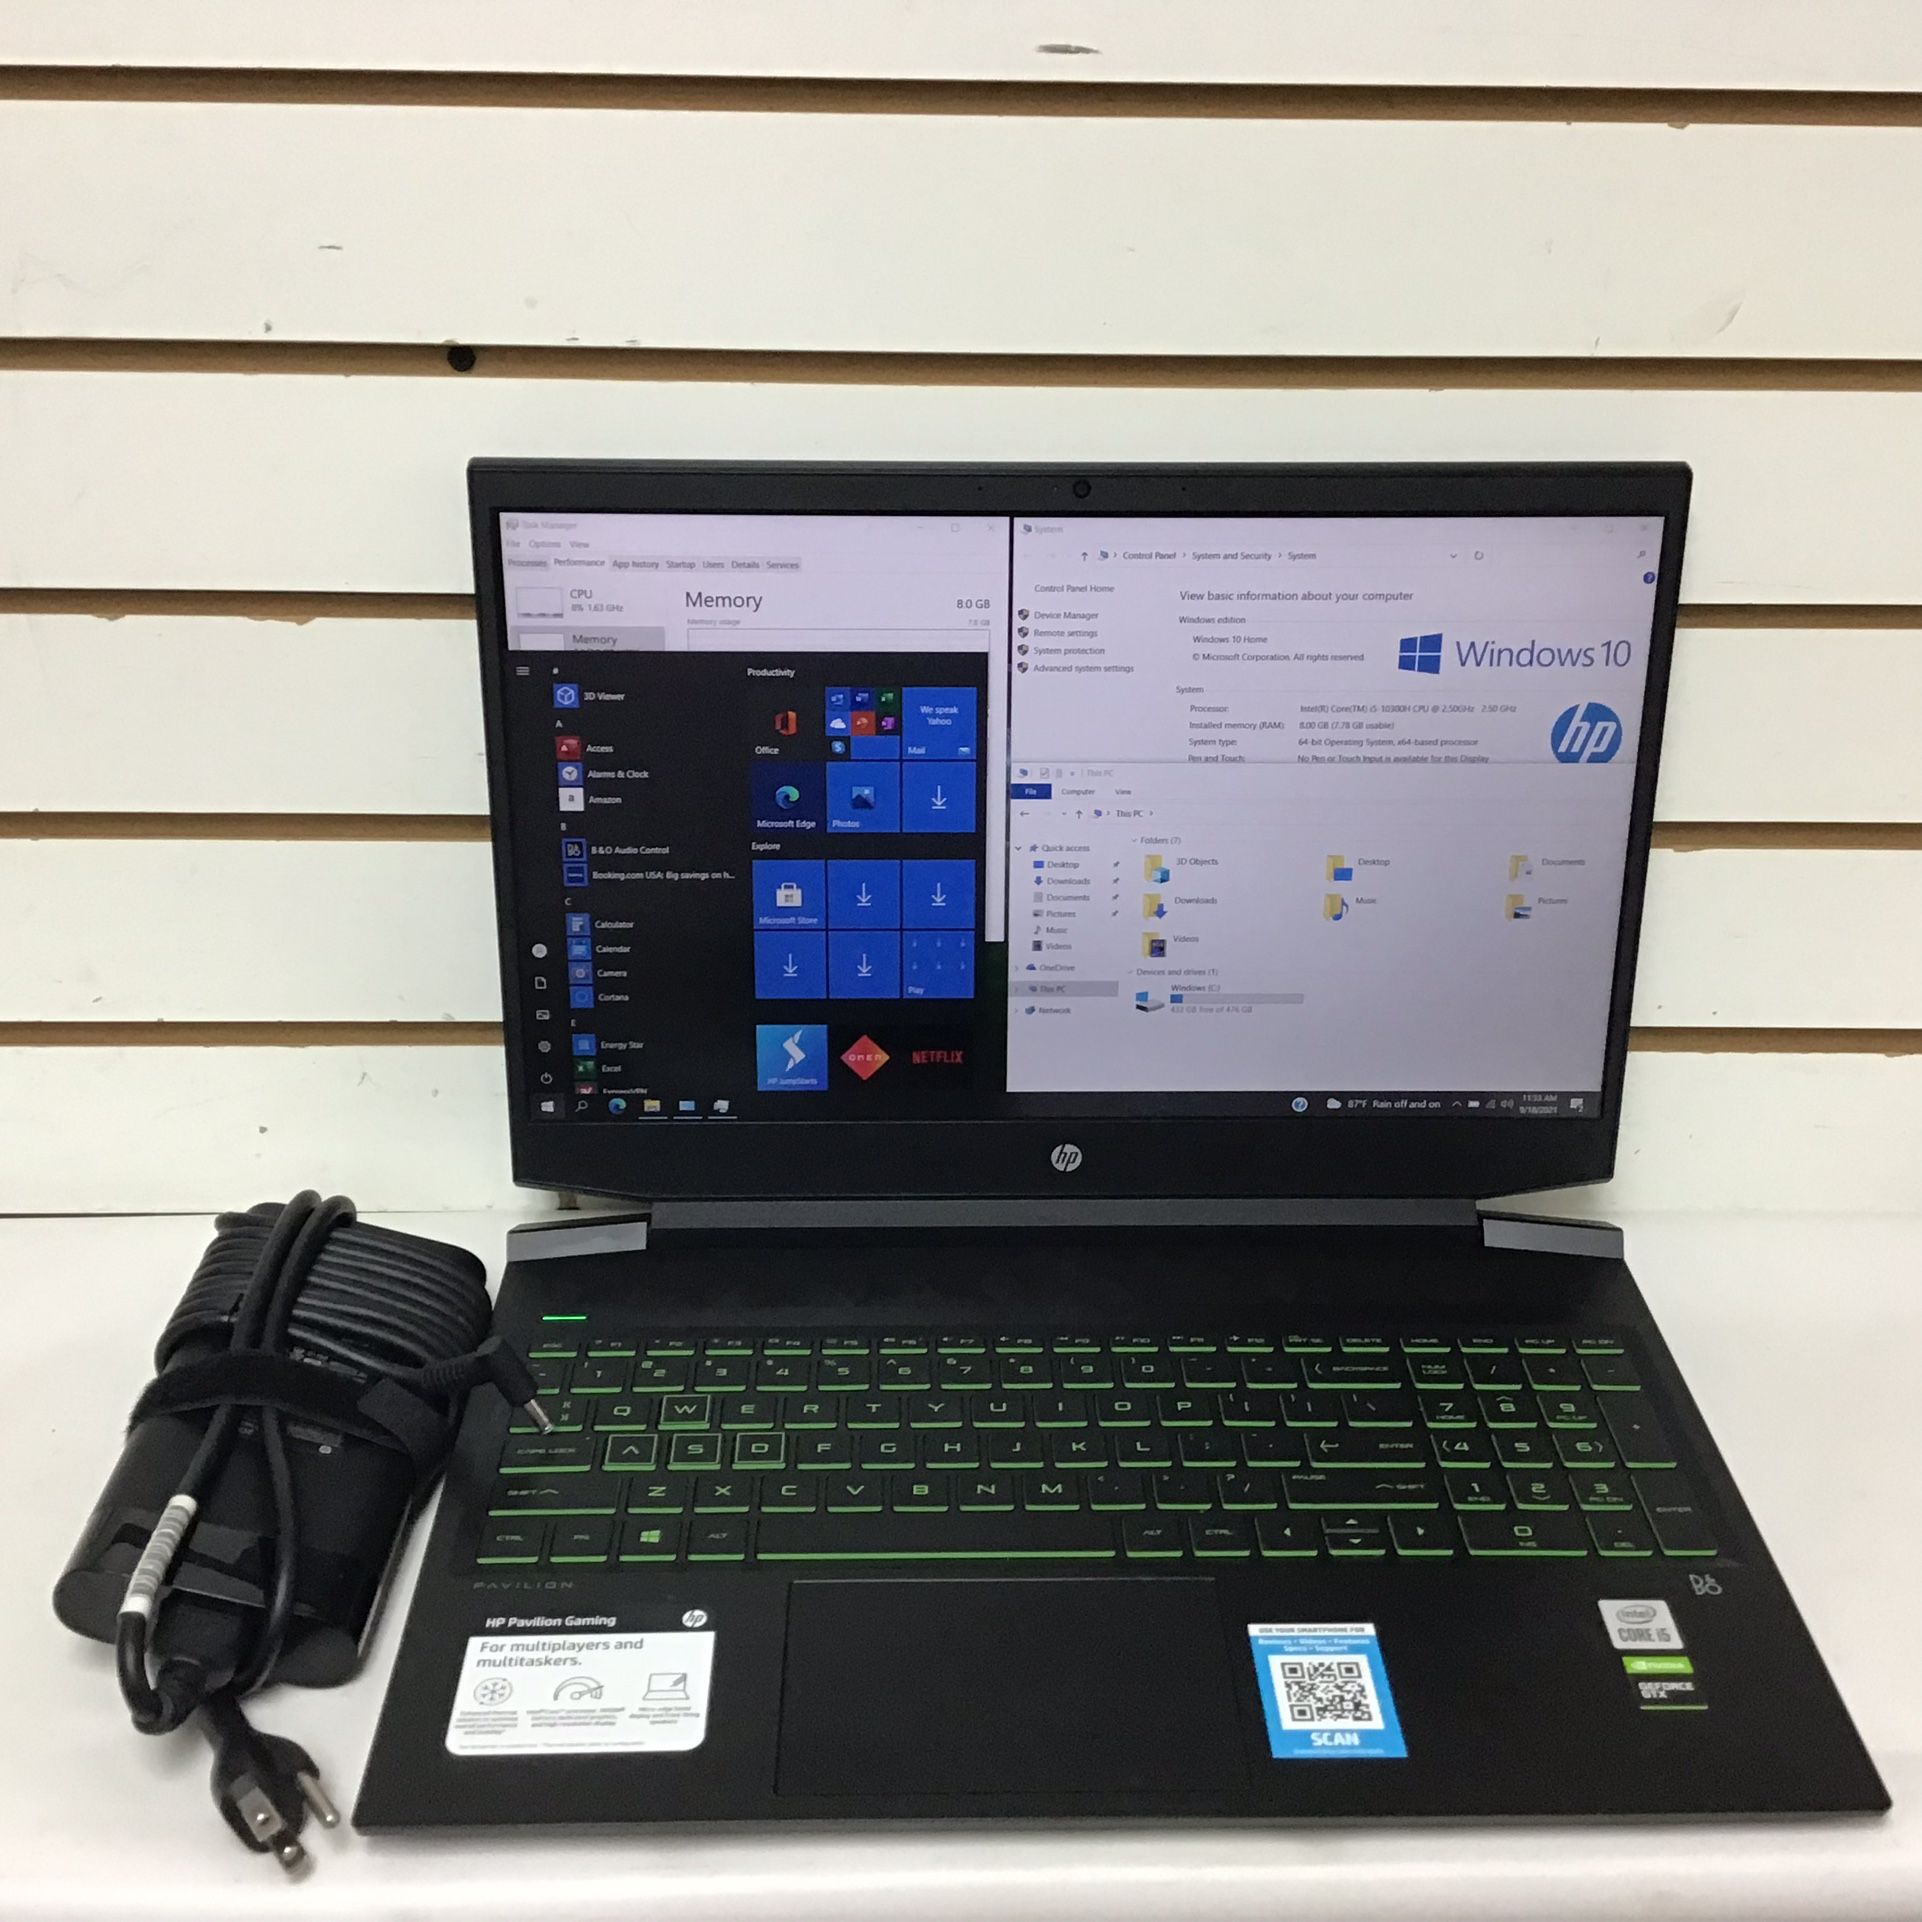 HP Pavilion Gaming Laptop -16.1” FHD 144hz Screen, Intel i5 10th Gen, 8GB RAM, 500GB SSD WINDOWS 10 Laptop